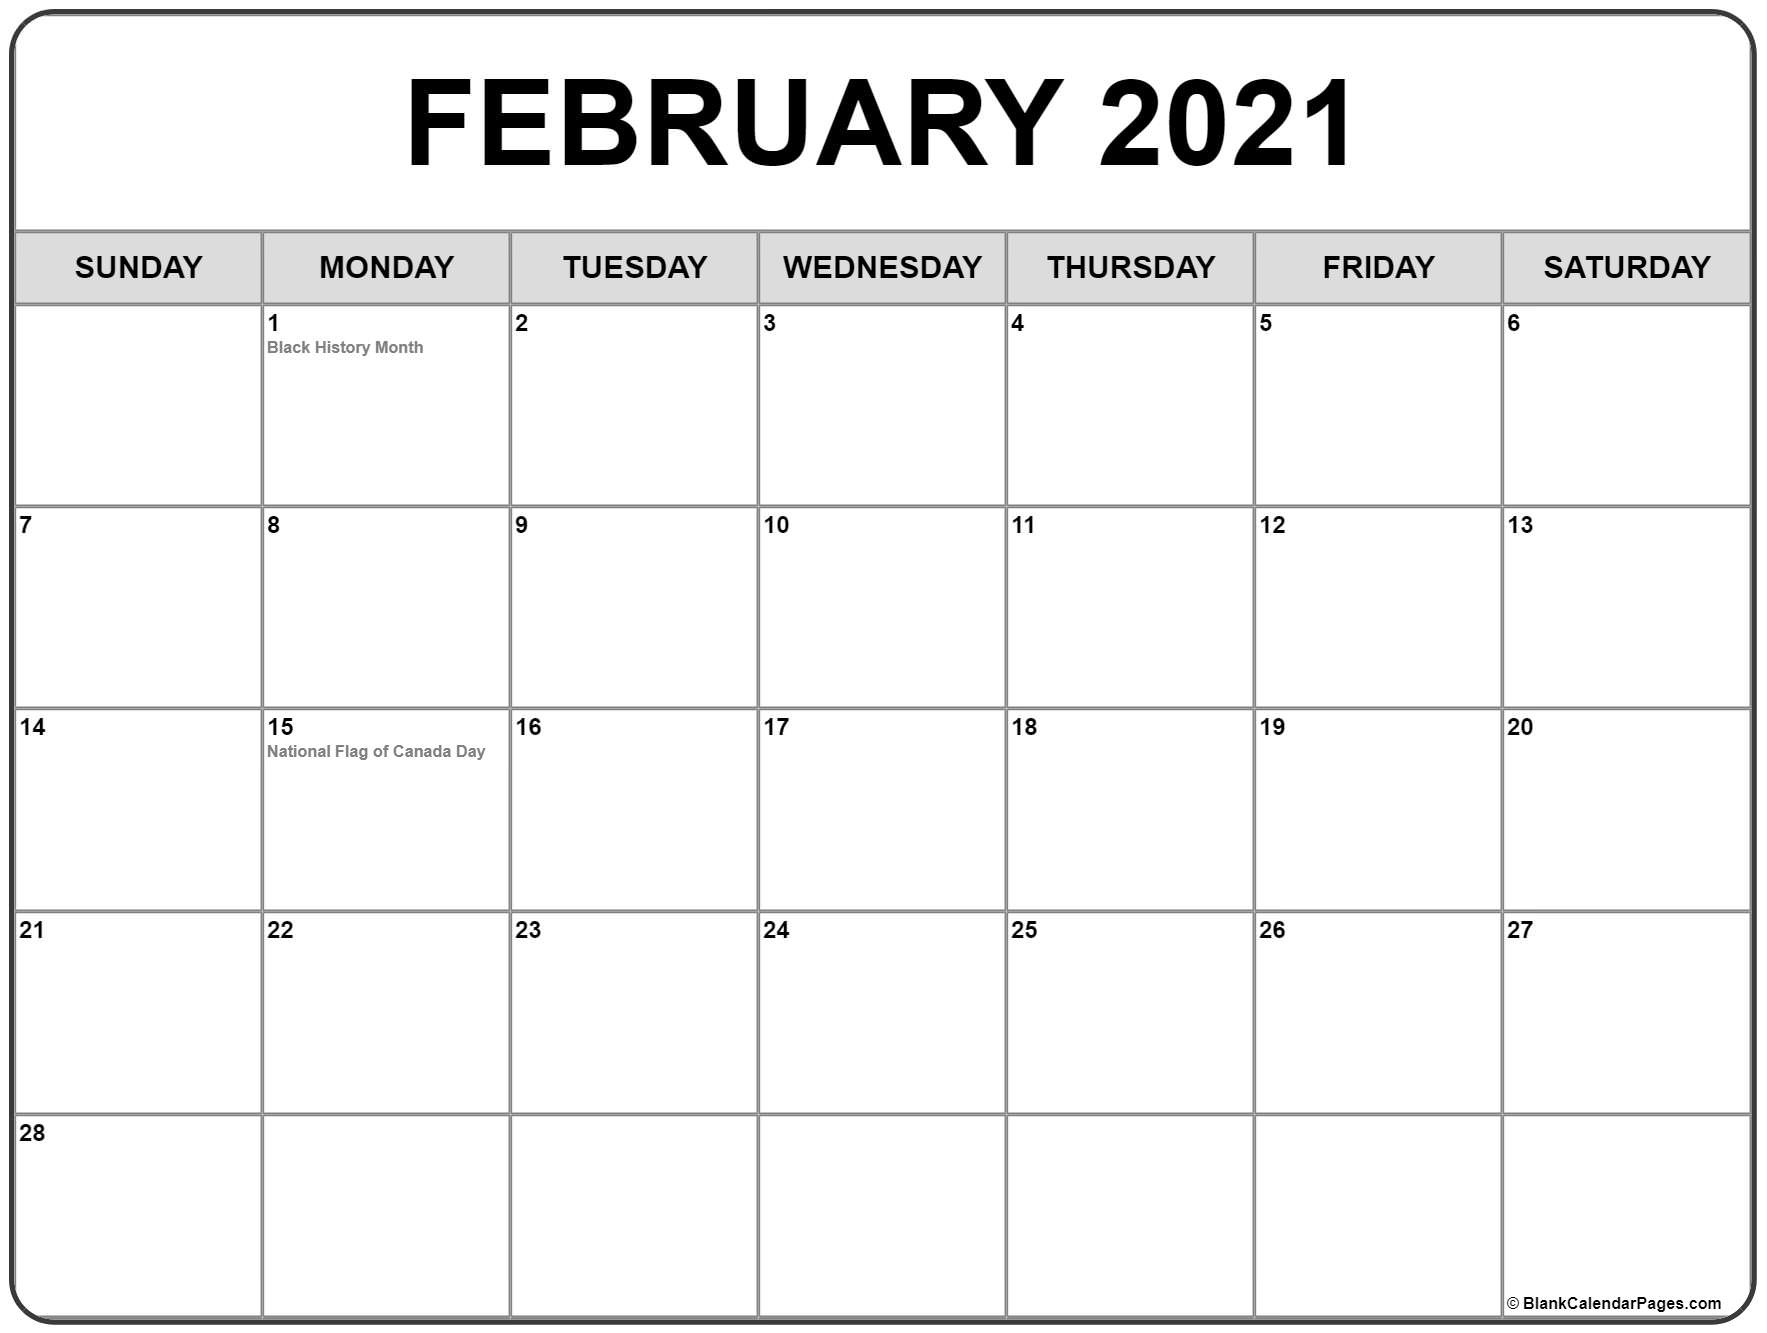 February 2021 calendar with holidays